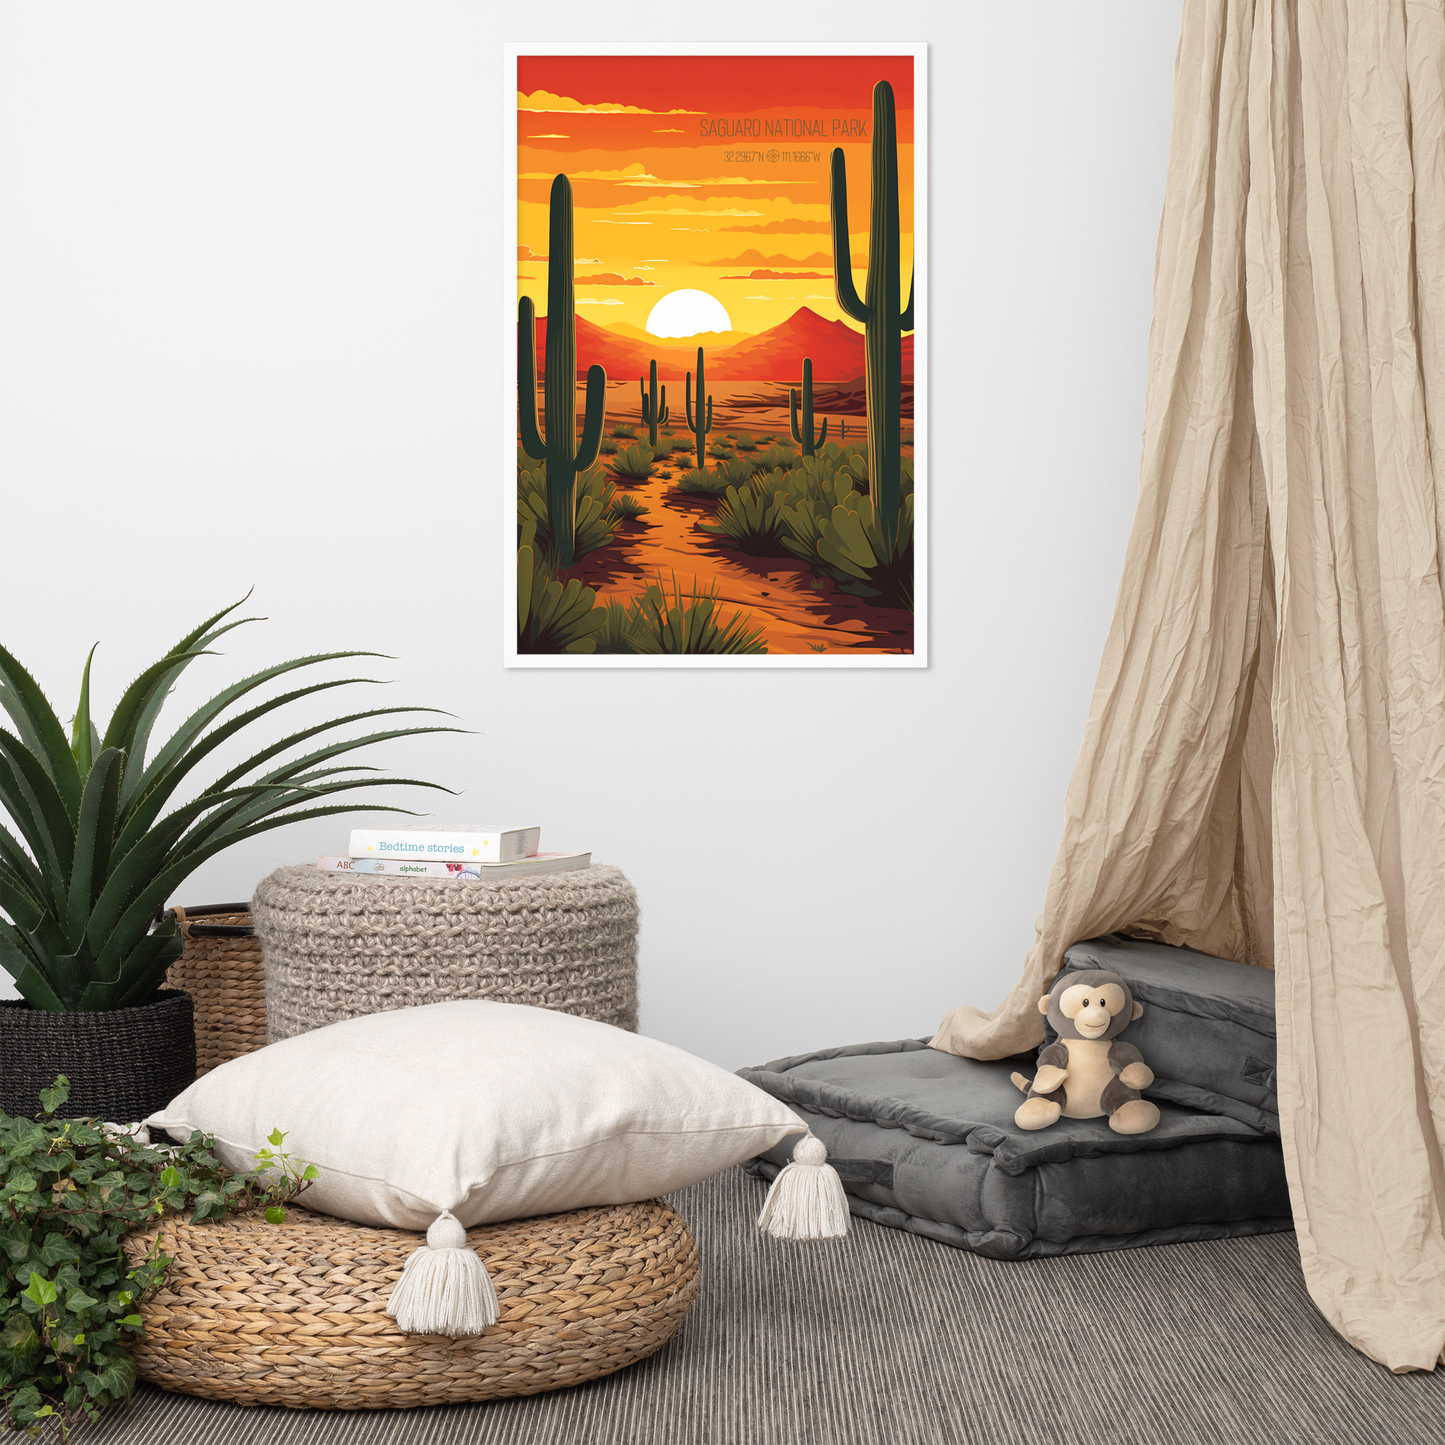 Arizona - Saguaro National Park (Framed poster)